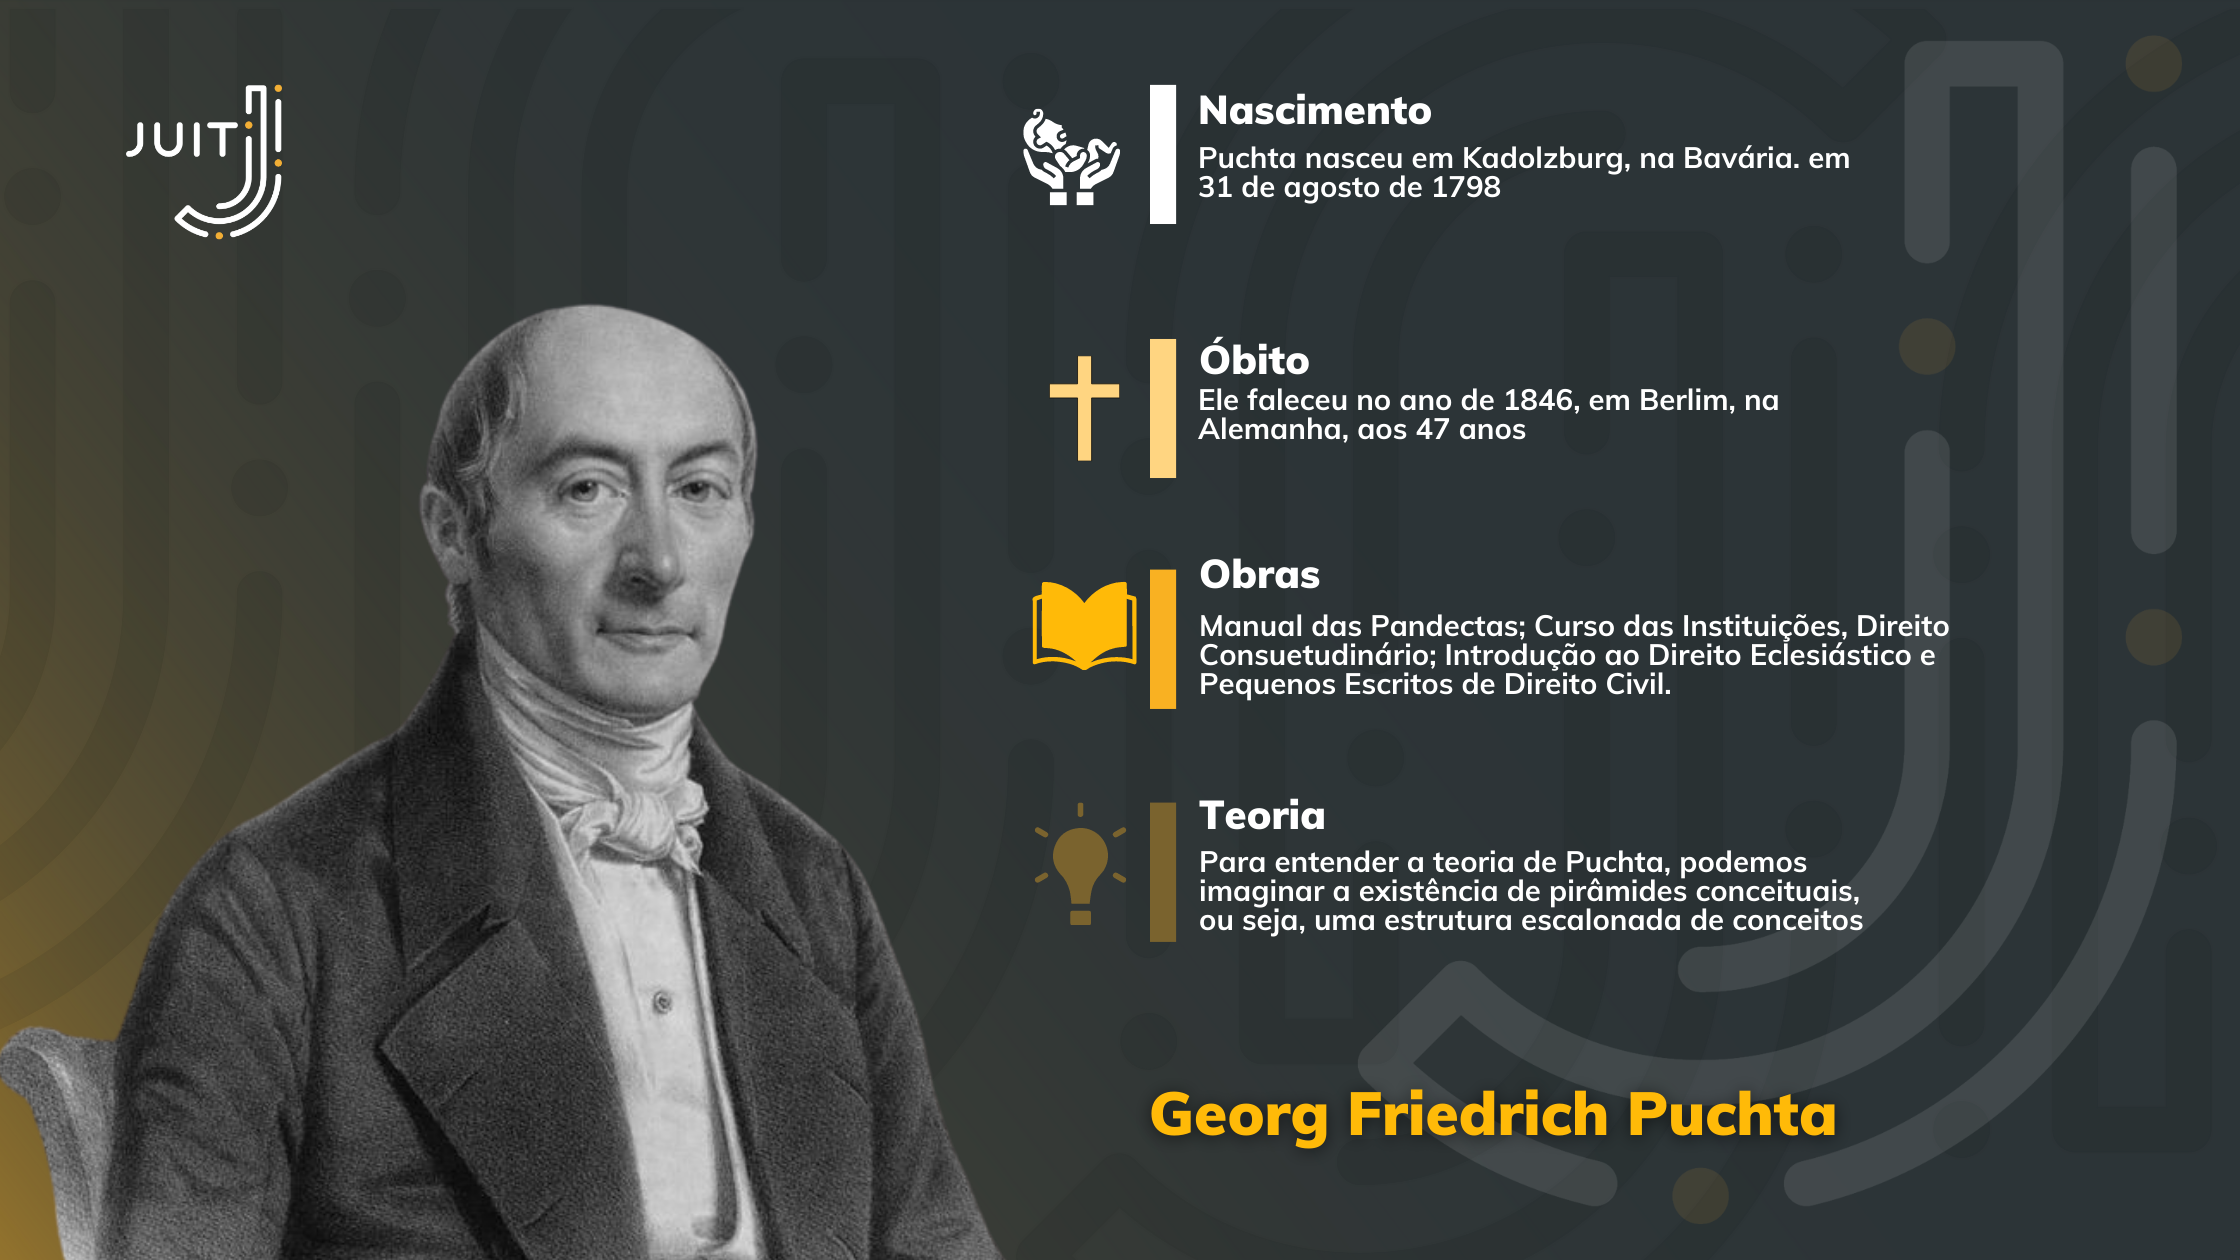 Georg Friedrich Puchta